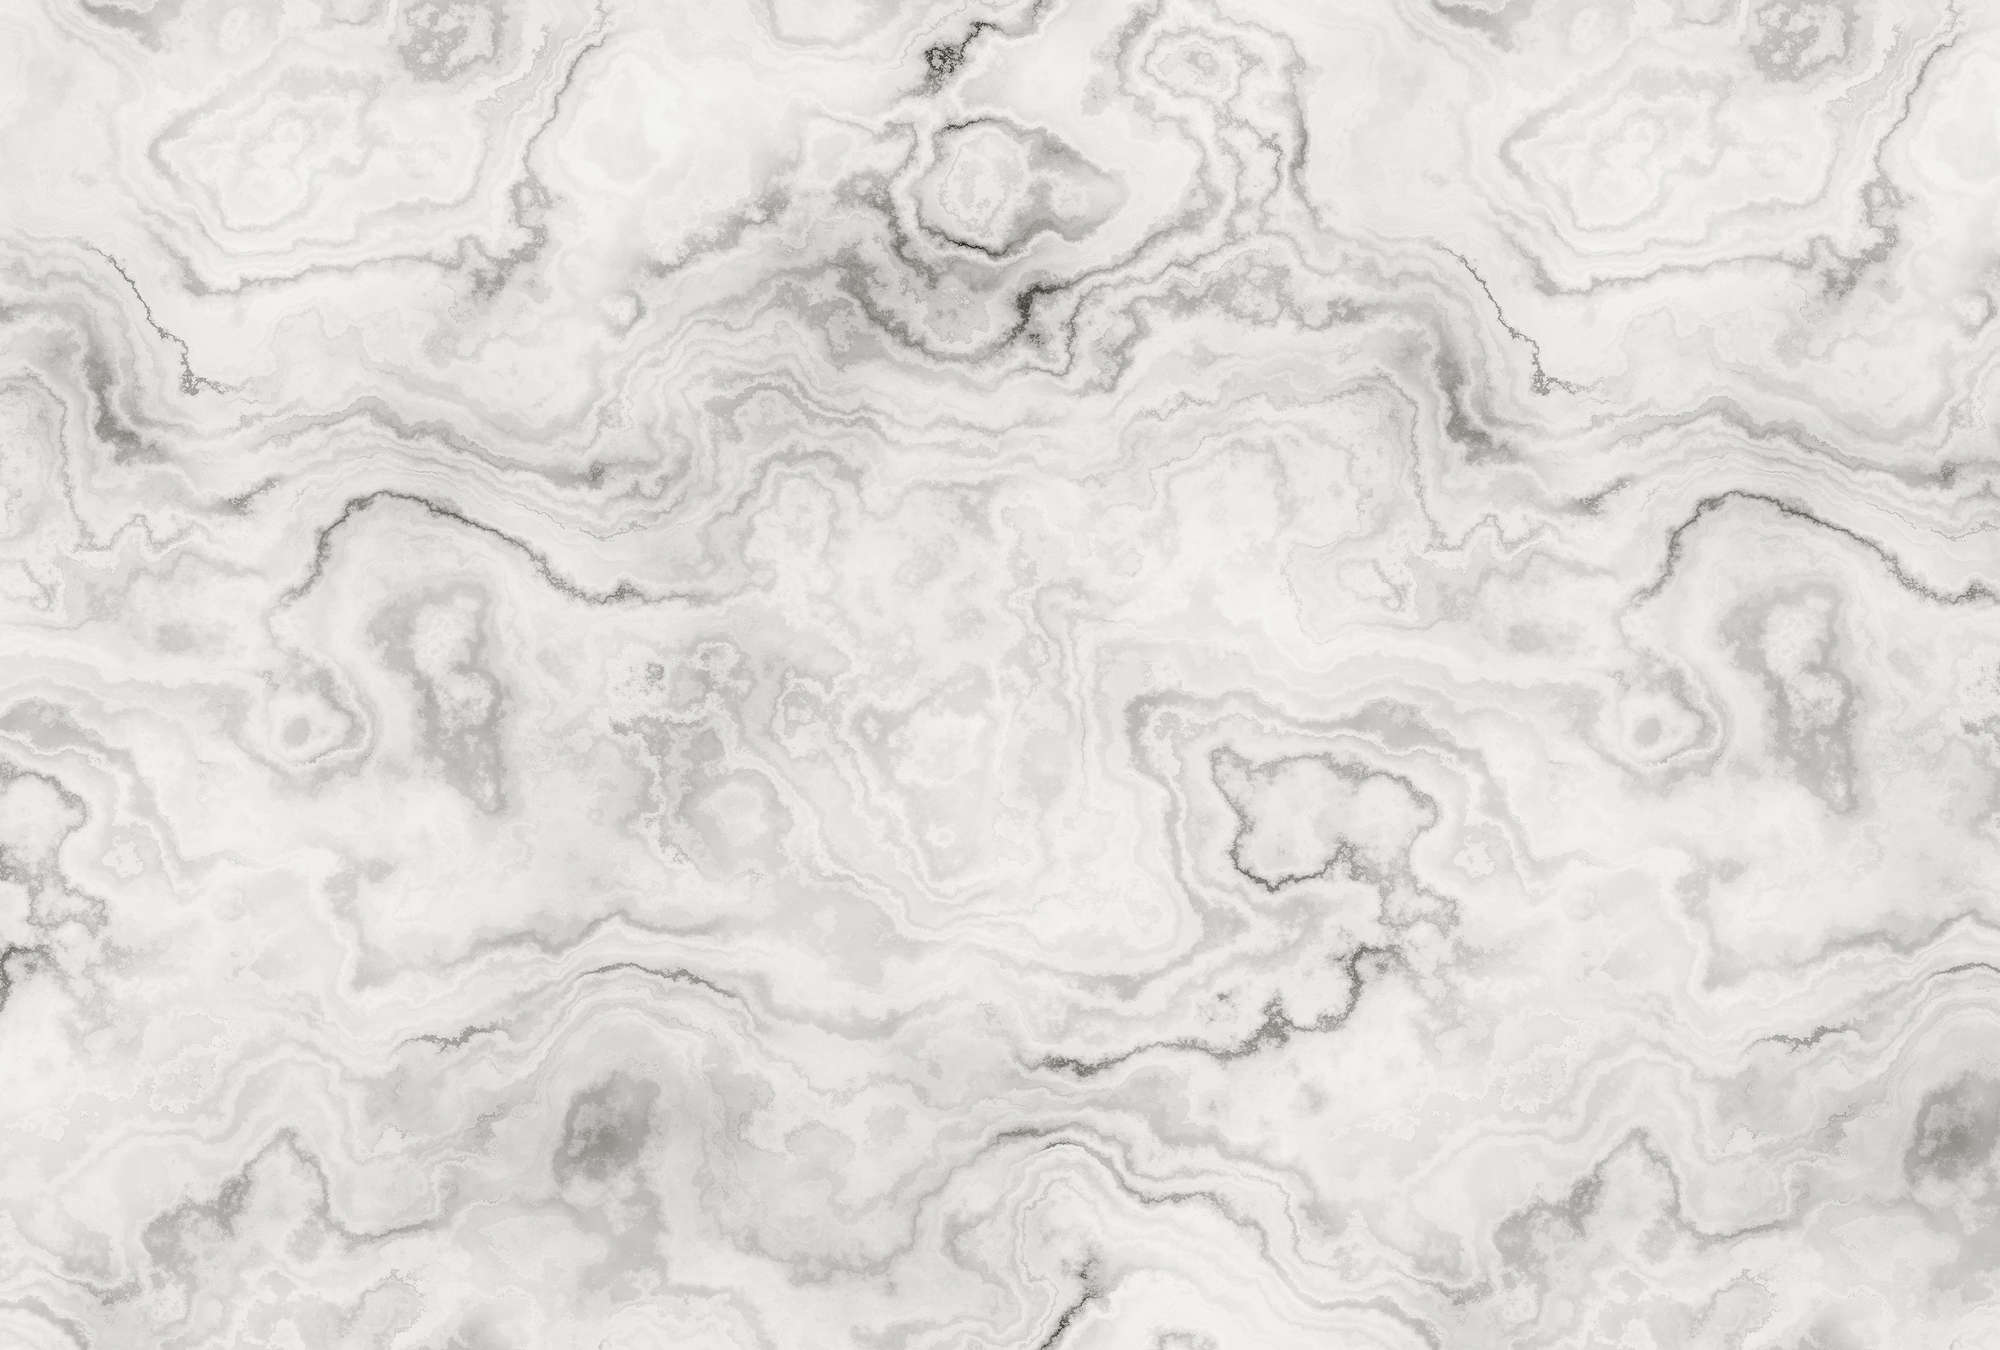             Carrara 1 - Fototapete in eleganter Marmoroptik – Grau, Weiss | Struktur Vlies
        